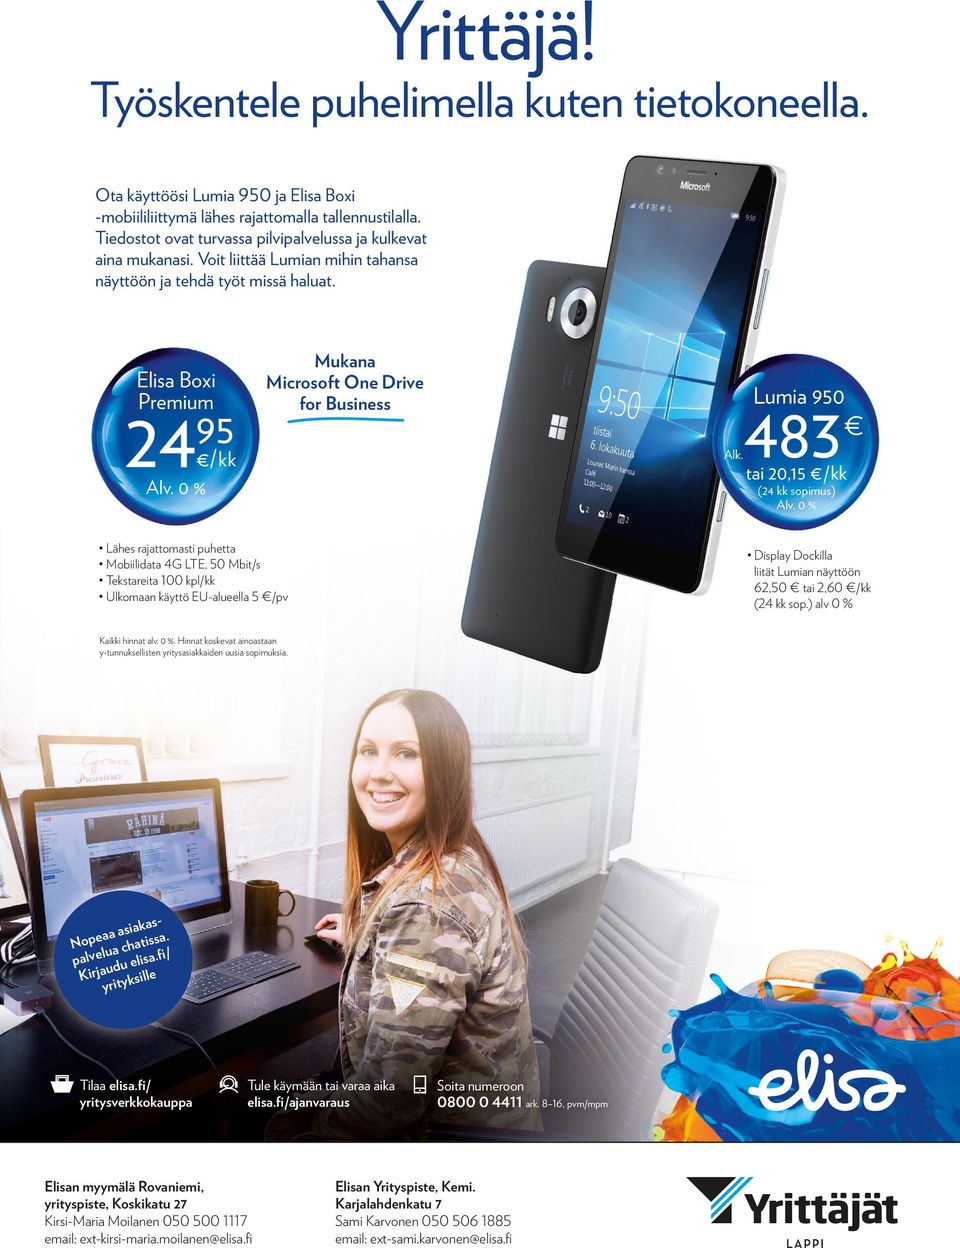 0 % Mukana Microsoft One Drive for Business Lumia 950 Alk.483 tai 20,15 /kk (24 kk sopimus) Alv.